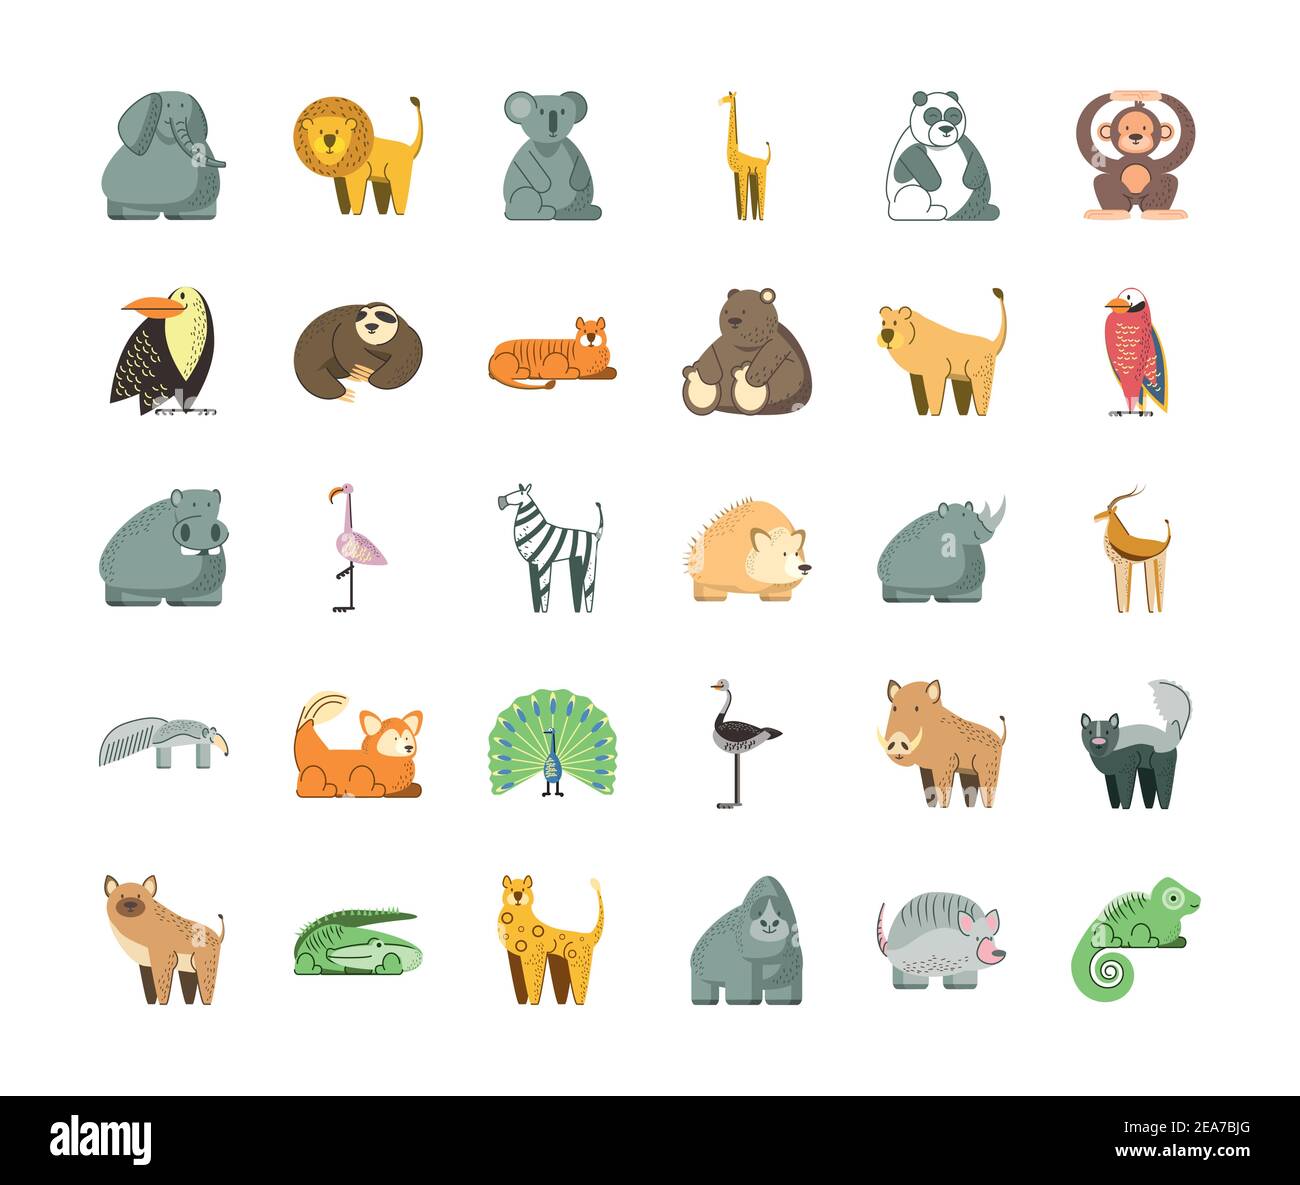 https://c8.alamy.com/comp/2EA7BJG/jungle-animals-cartoon-elephant-lion-koala-panda-bear-hippo-and-more-vector-illustration-2EA7BJG.jpg